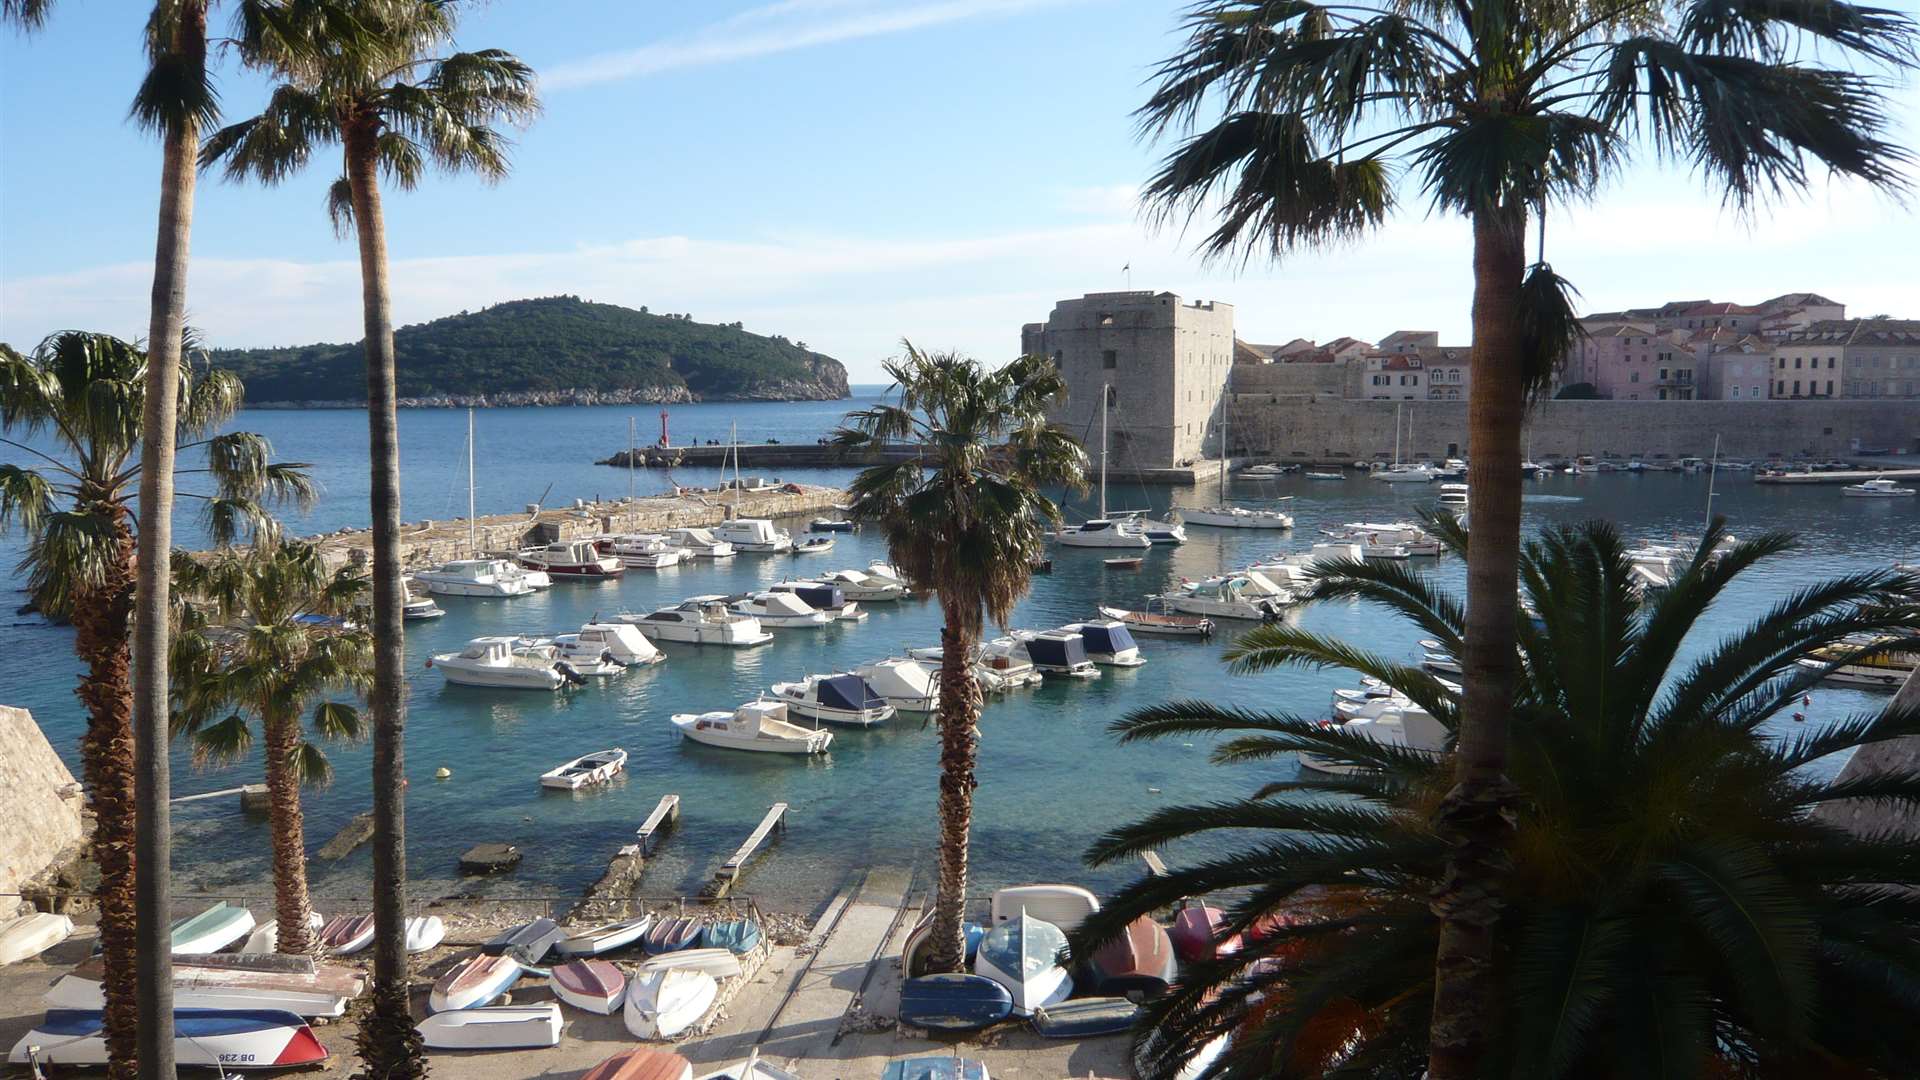 Dubrovnik's waterside